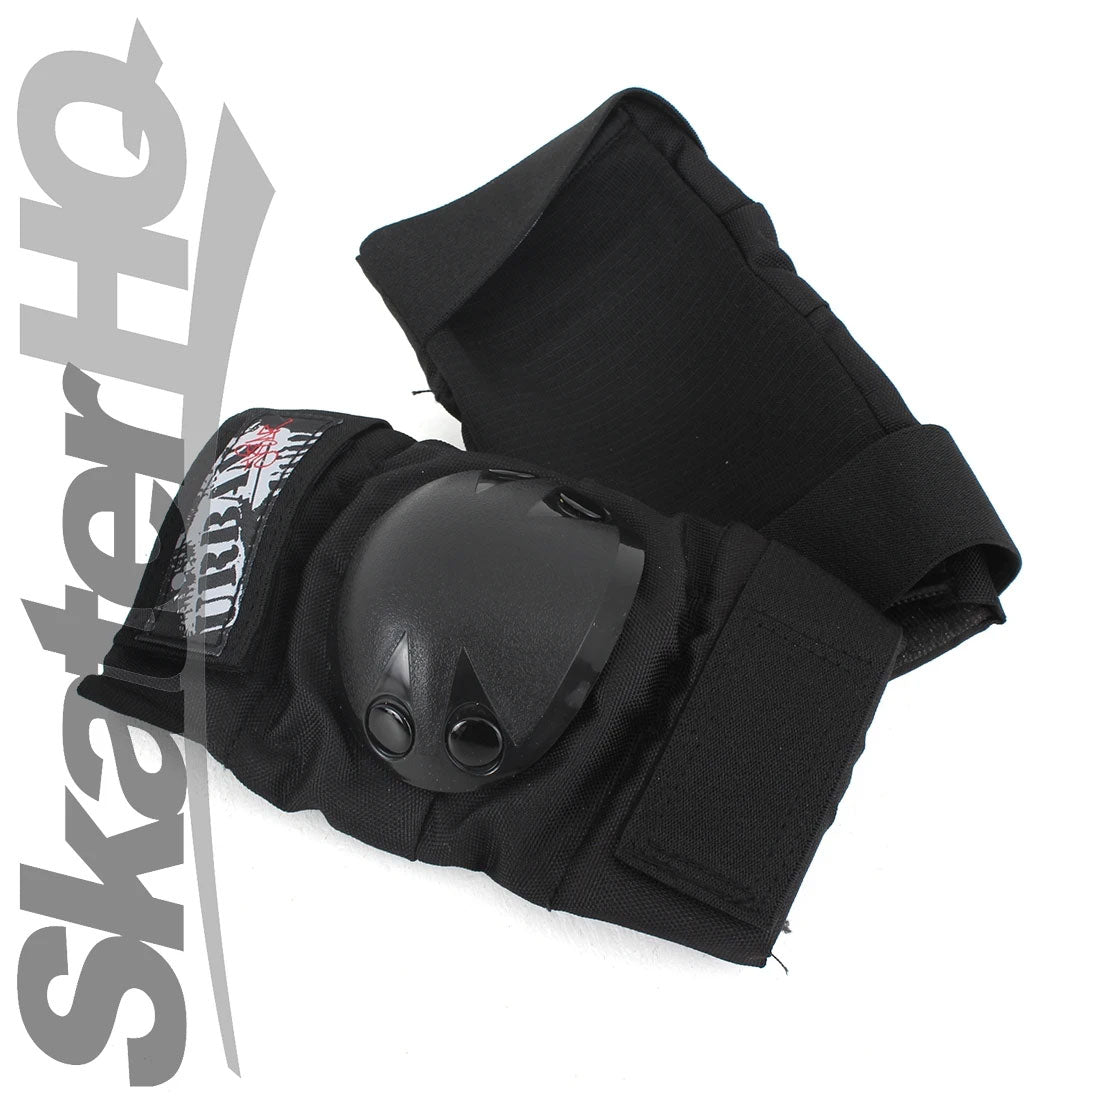 Urban Skater Knee/Elbow Black - XLarge Protective Gear